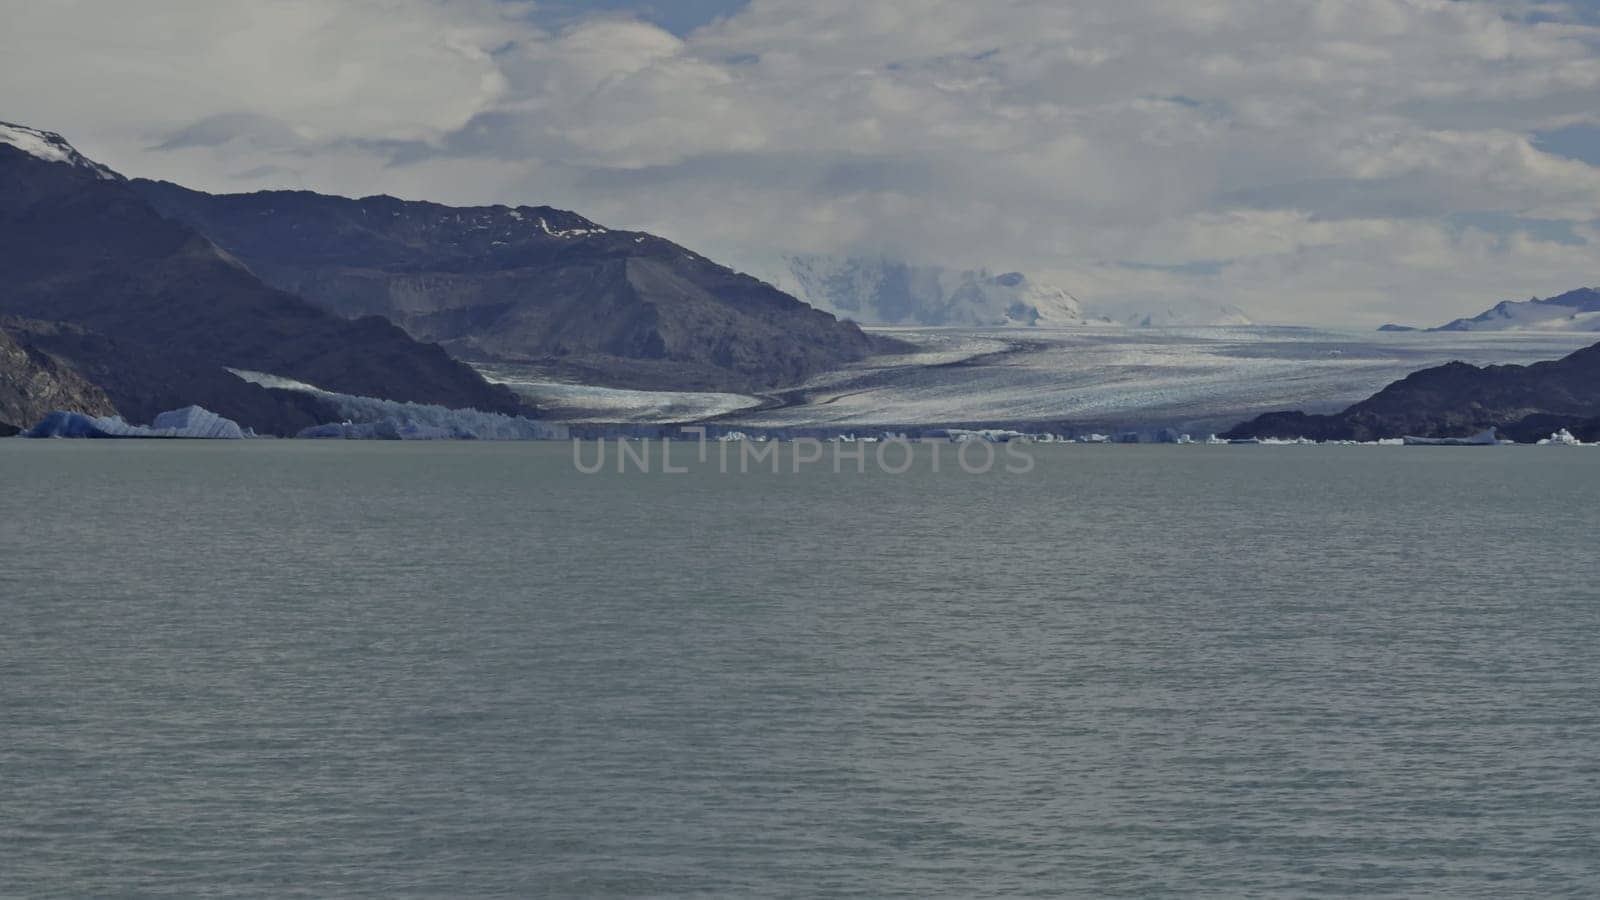 Boat tour on Lago Argentino showcasing the majestic Upsala Glacier, an emblem of nature's splendor and environmental shifts.